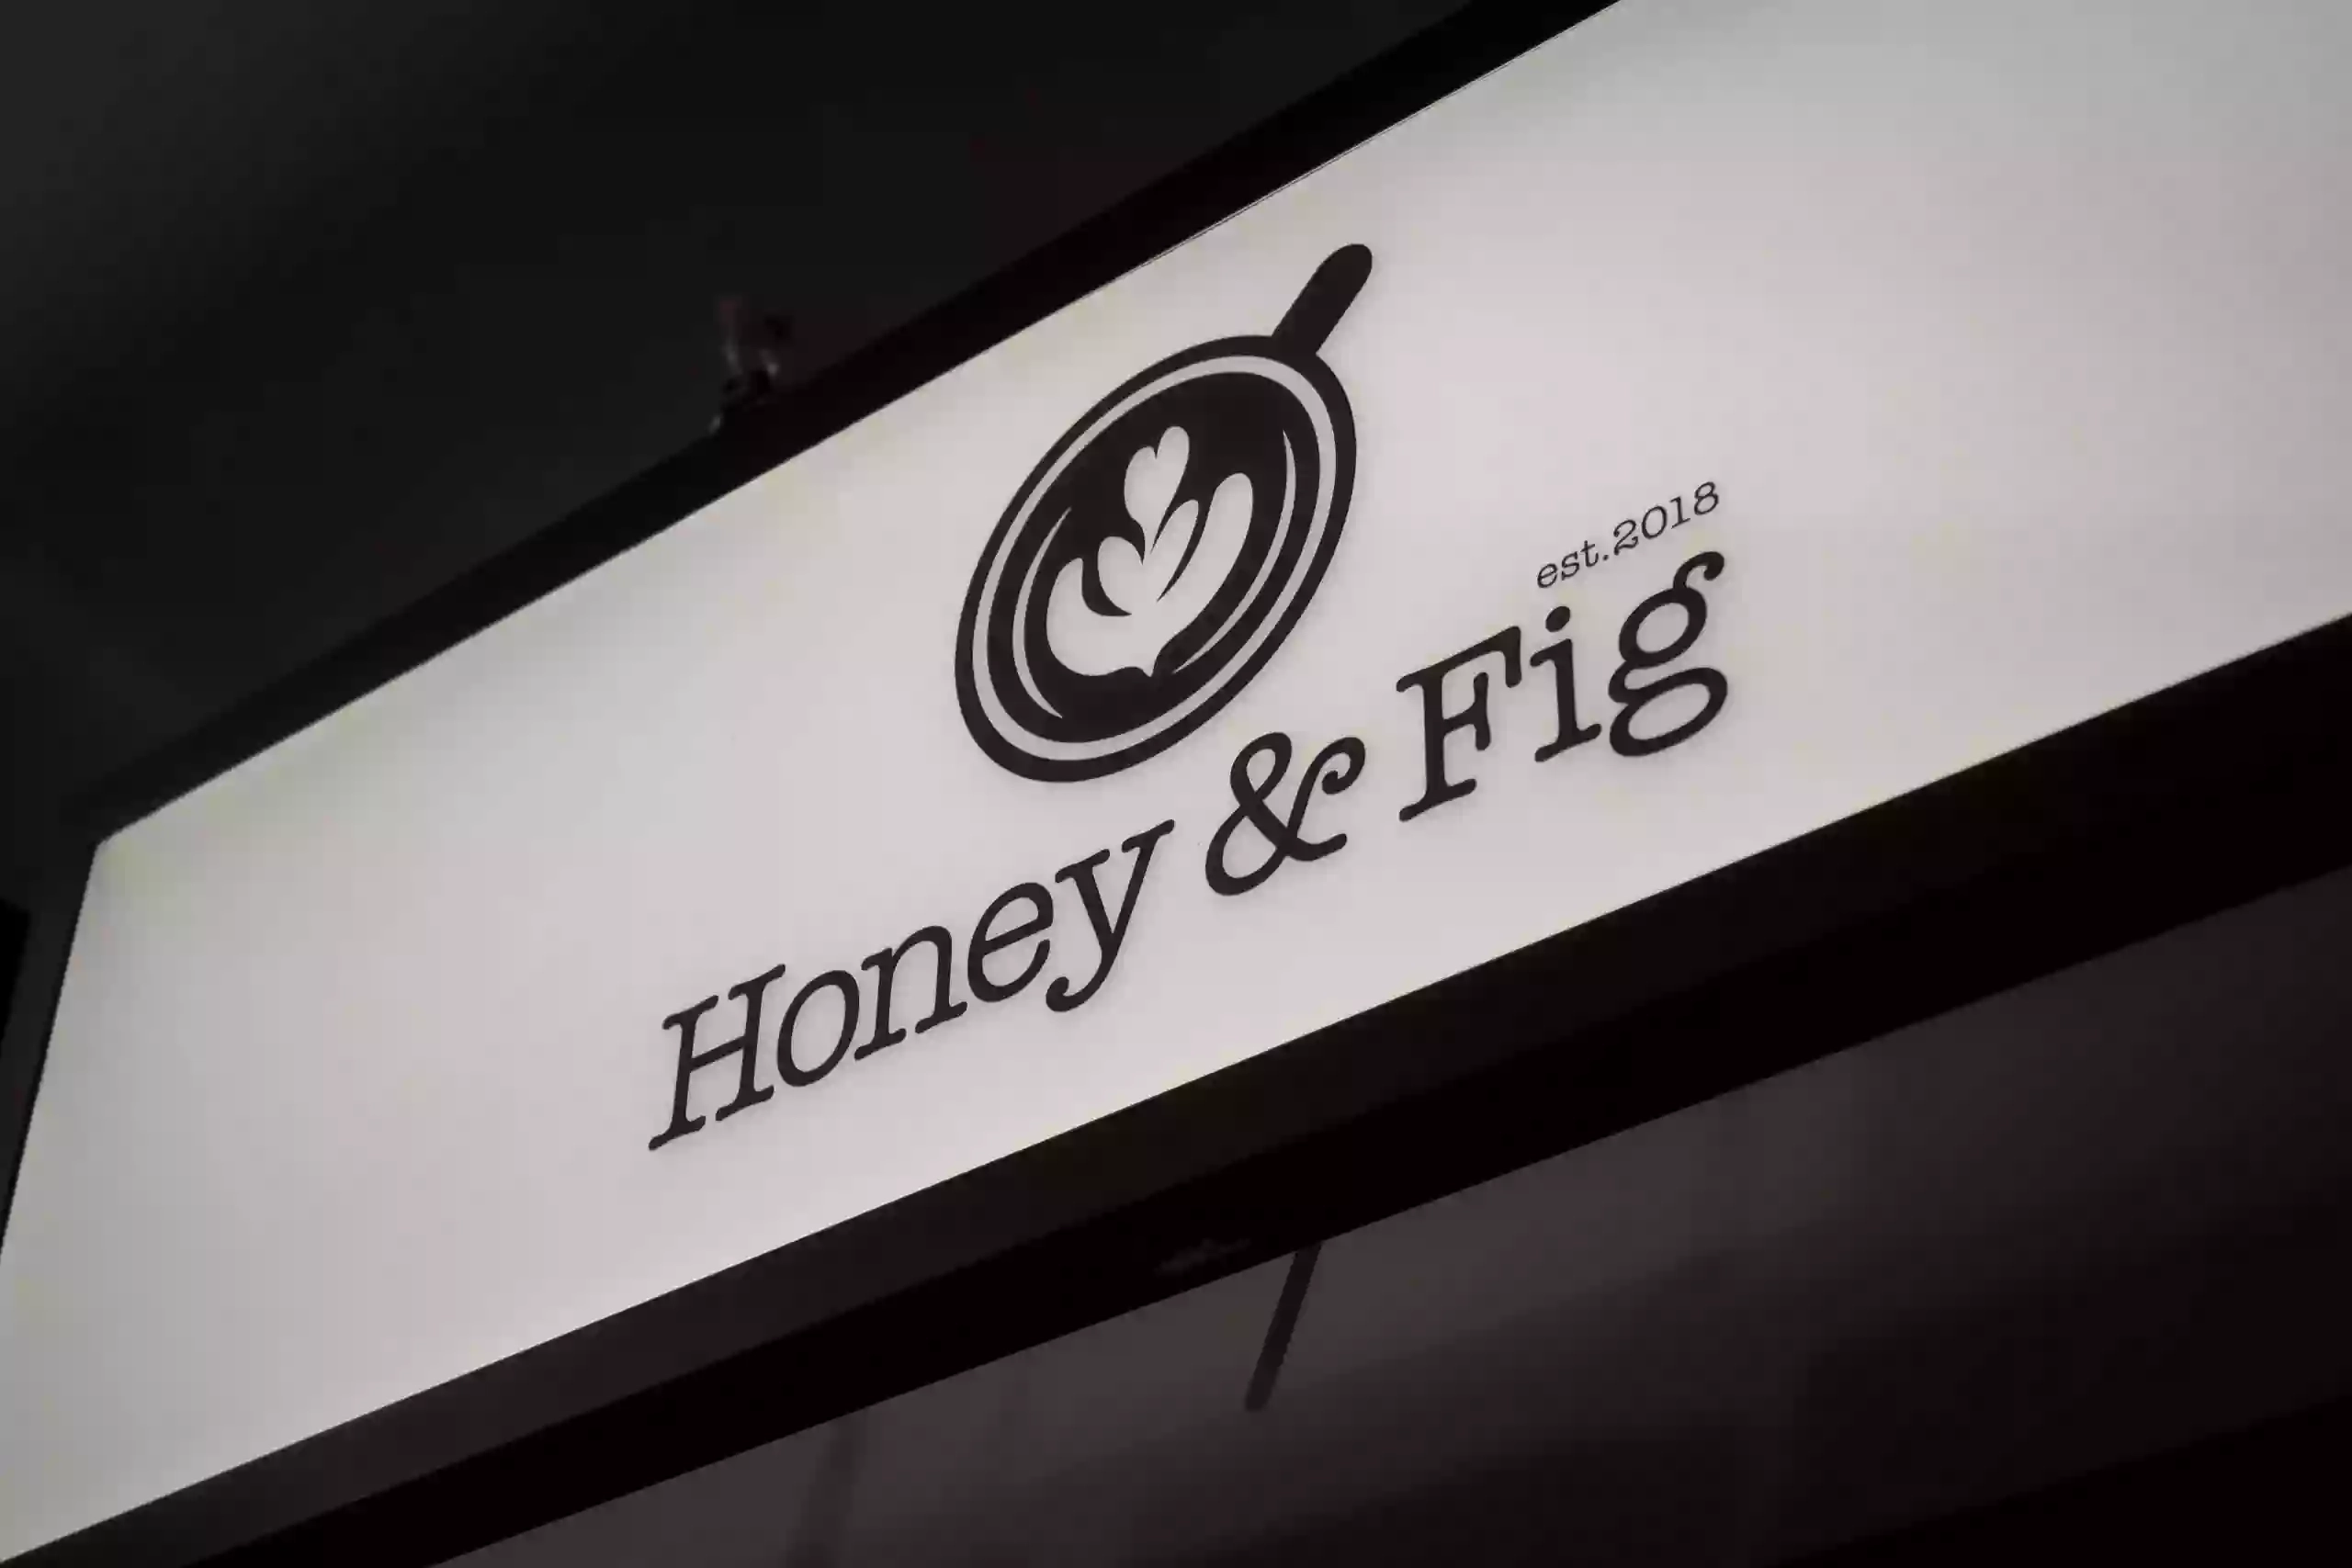 Honey & Fig